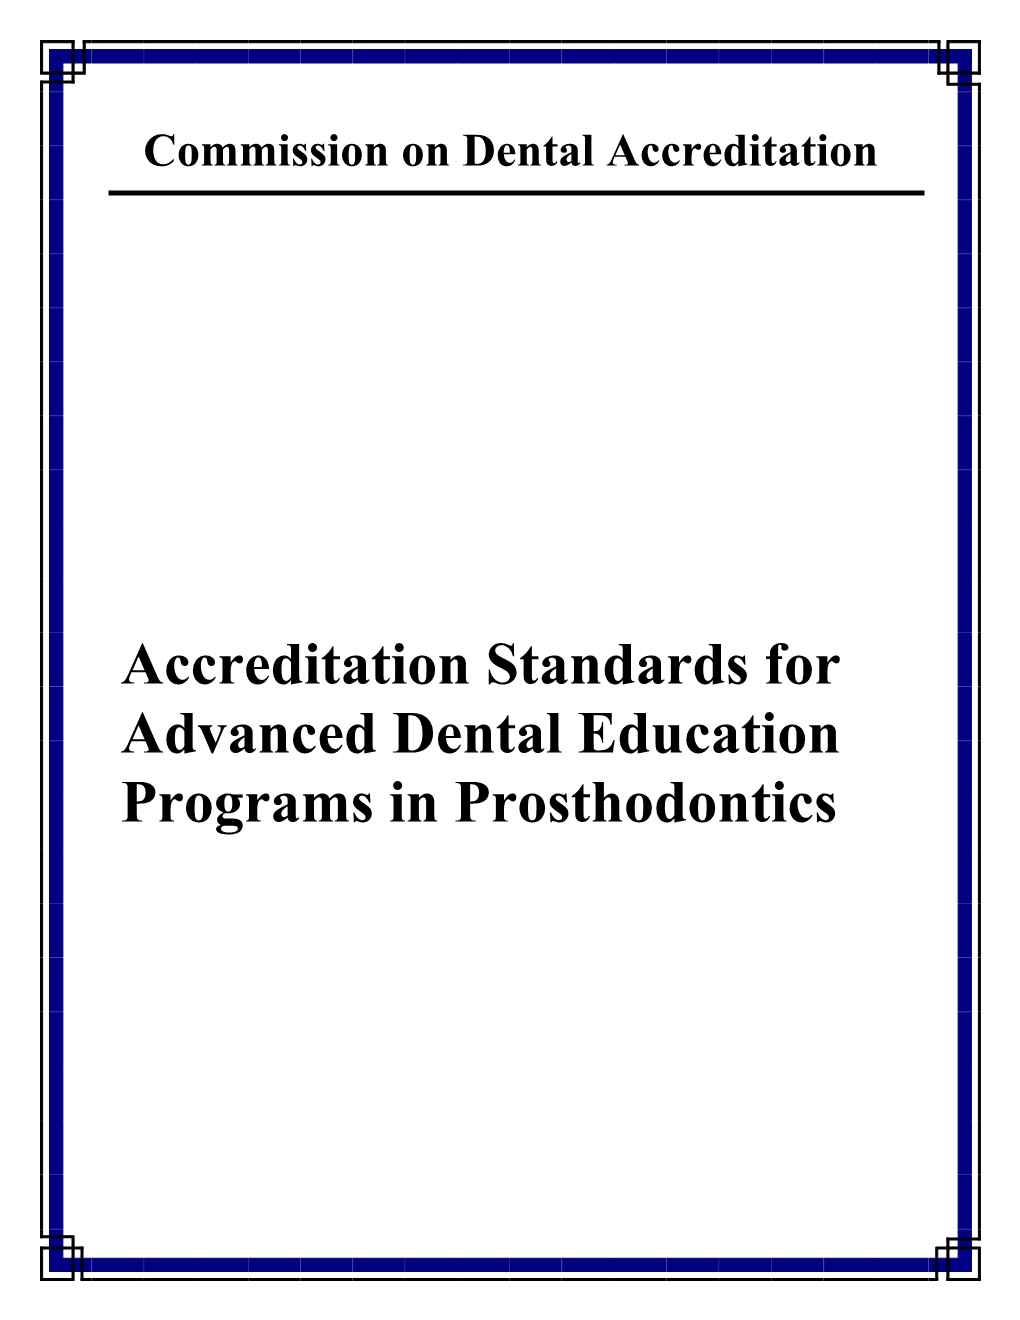 CODA.Org: Accreditation Standards for Prosthodontics Programs